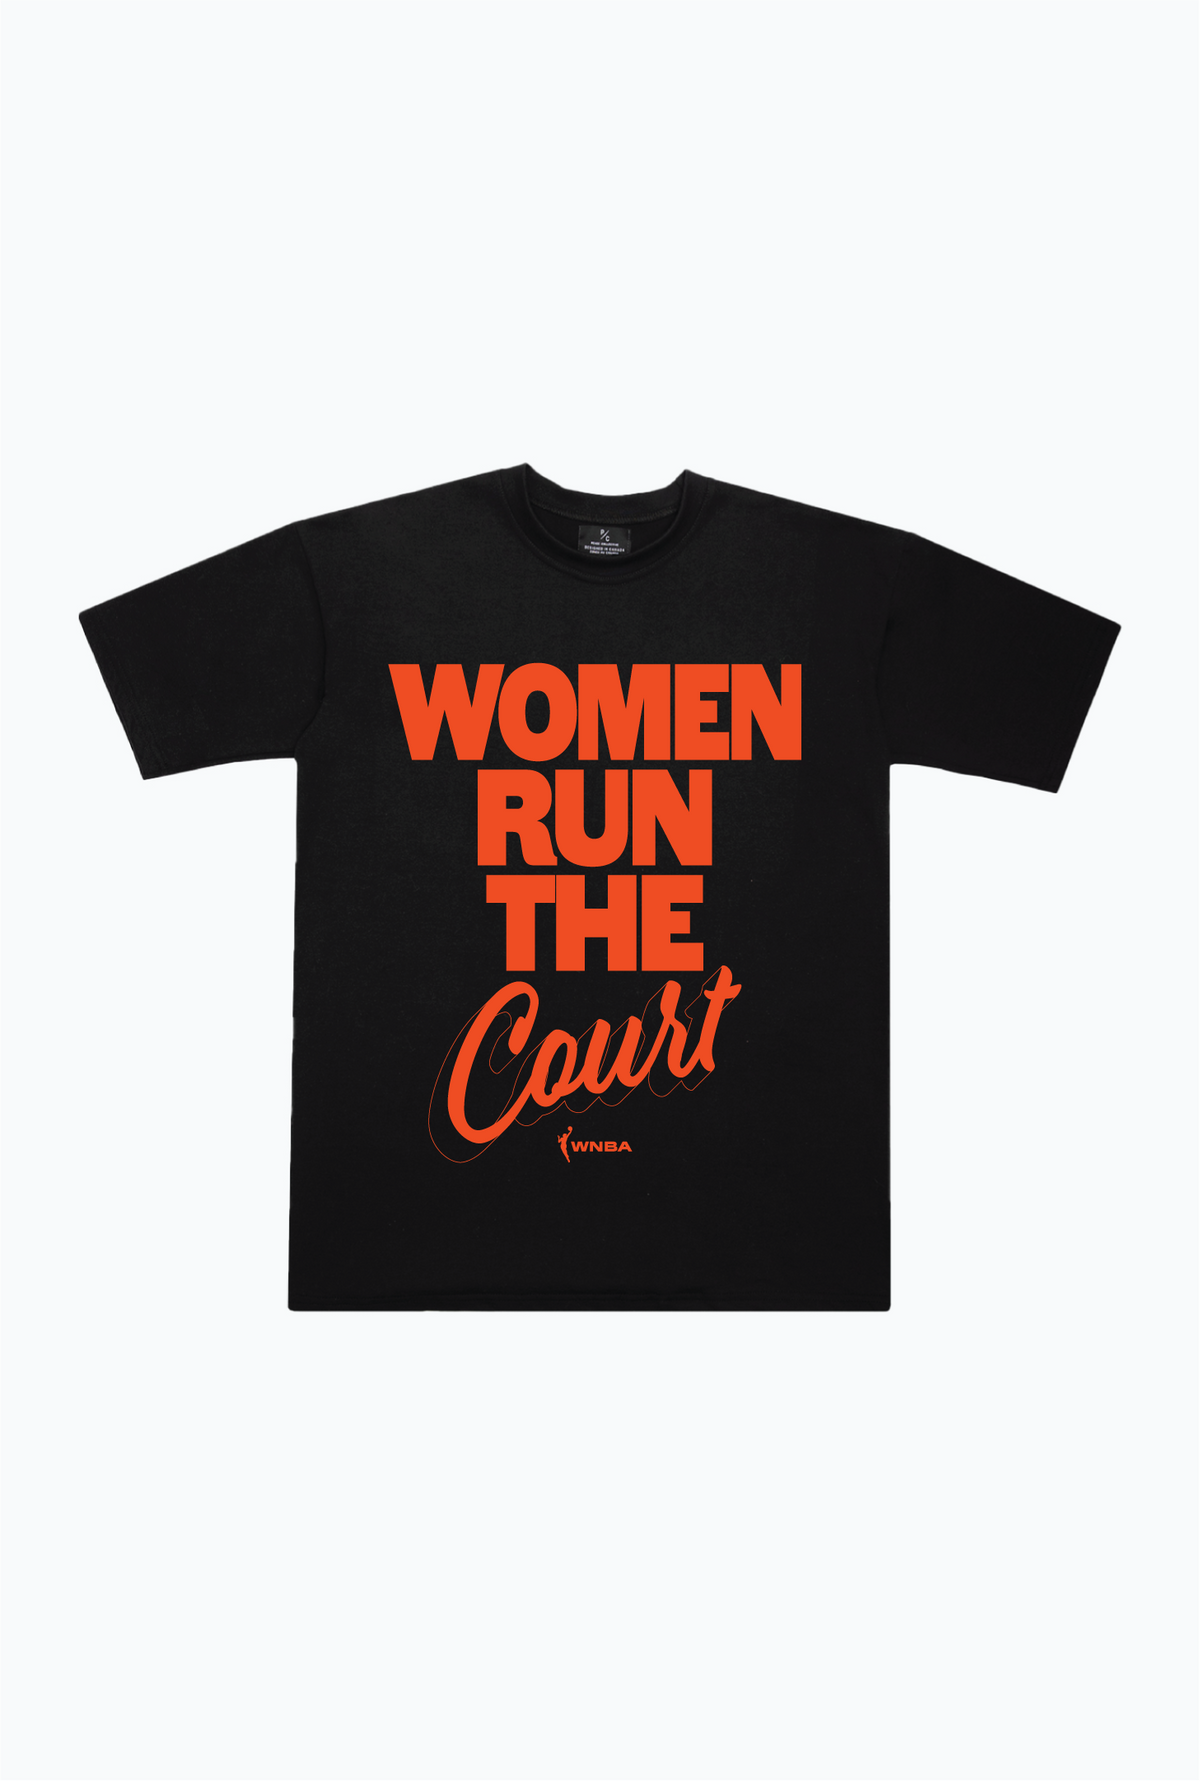 WNBA 2024 Canada Game Day Premium T-Shirt - Black